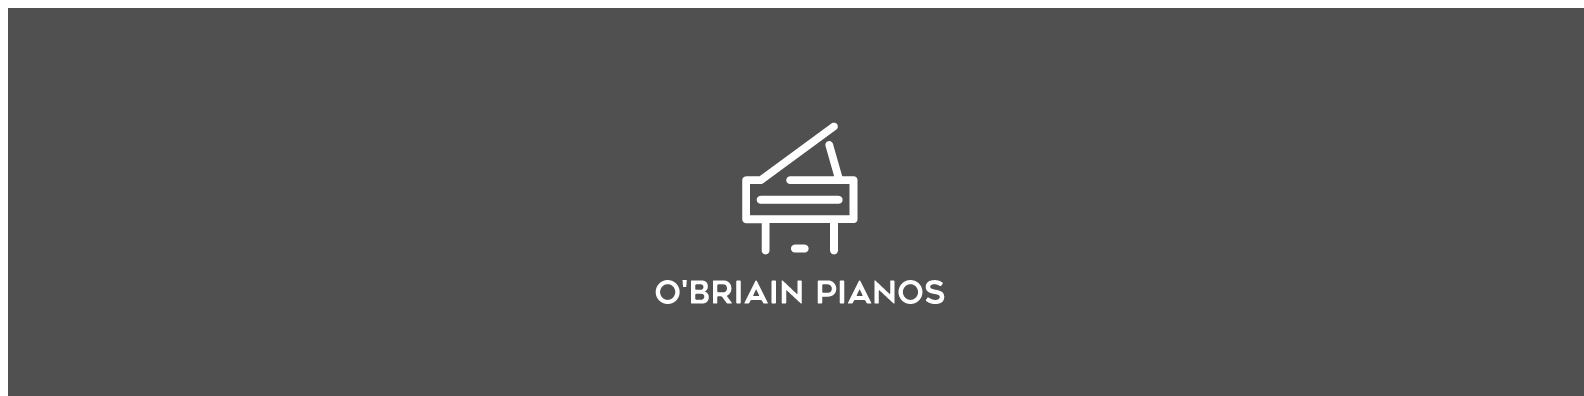 Yamaha U3 (1976)-O'Briain Pianos